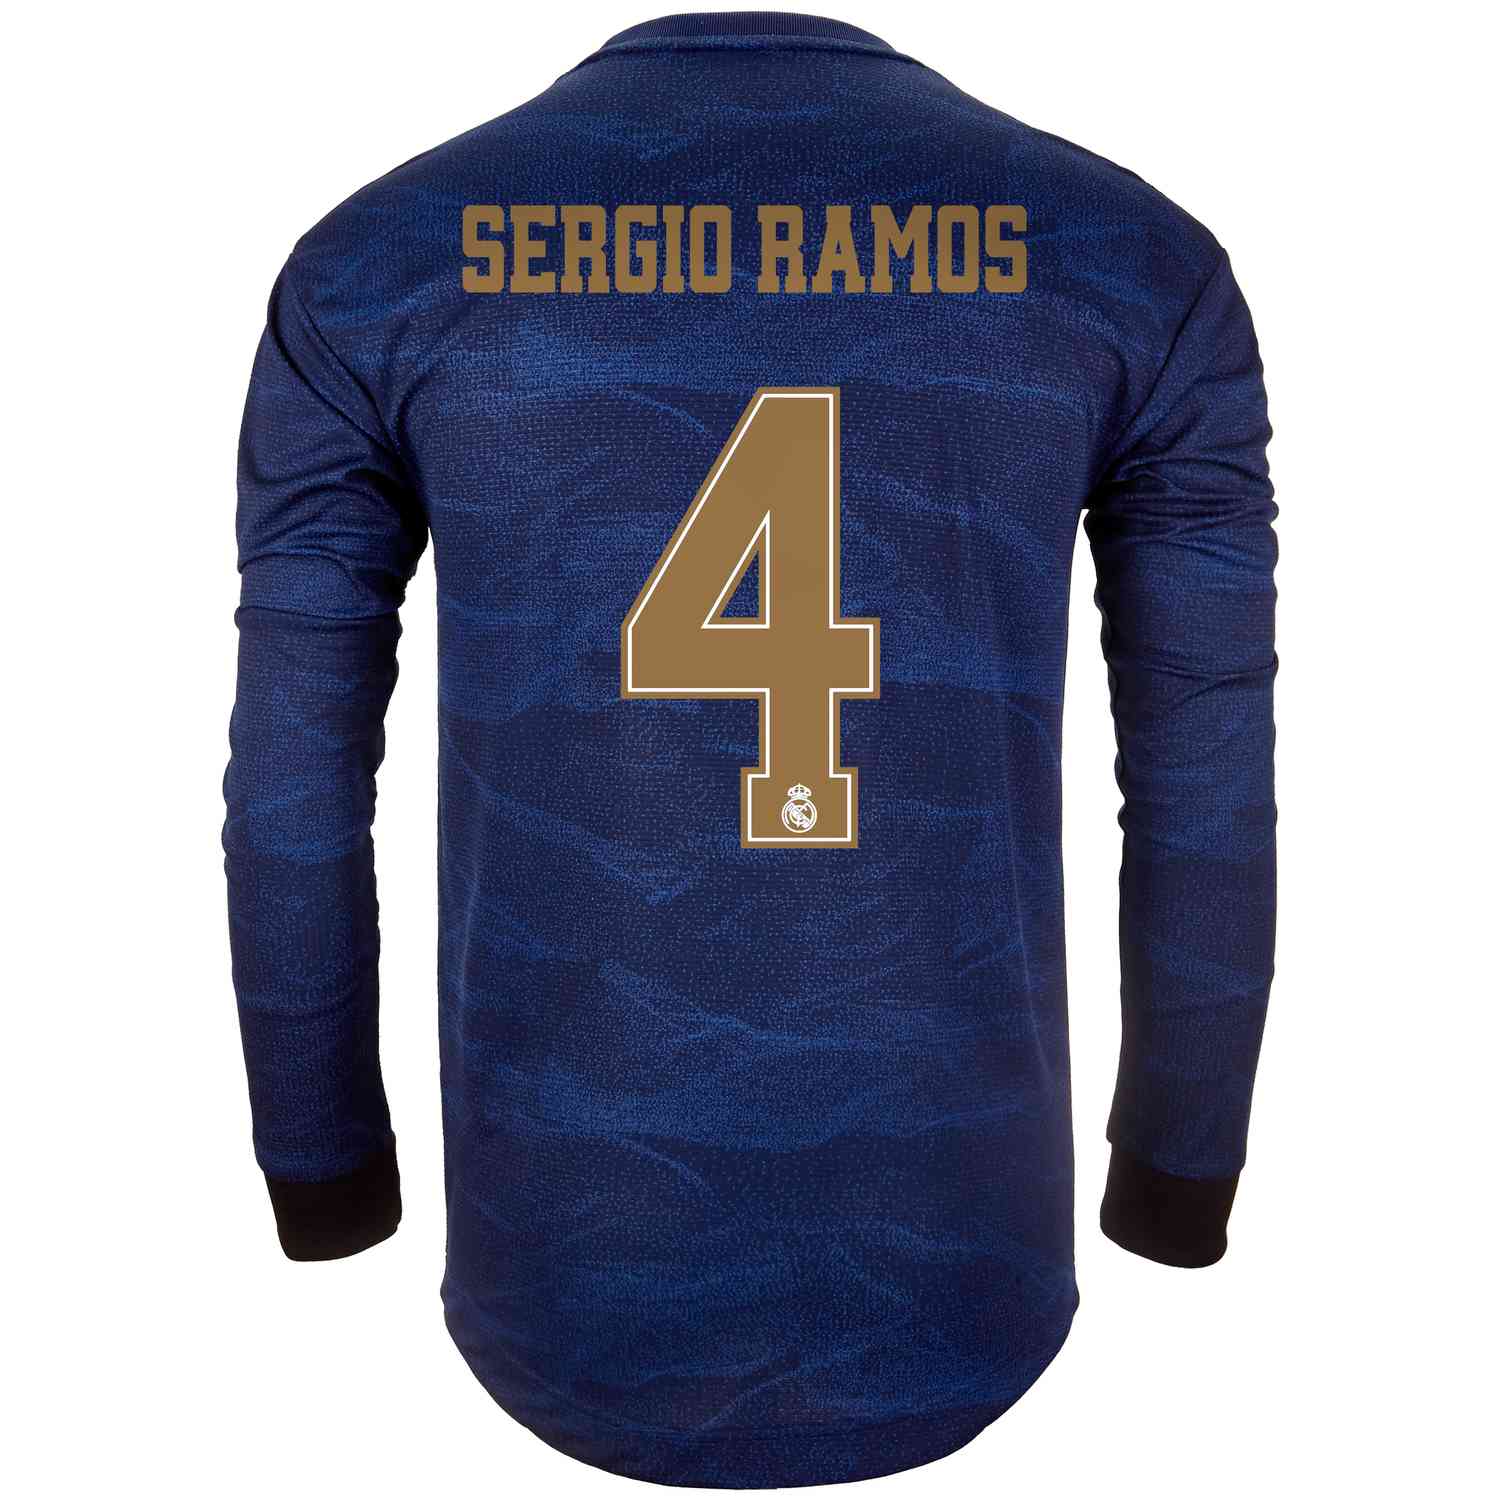 sergio ramos authentic jersey